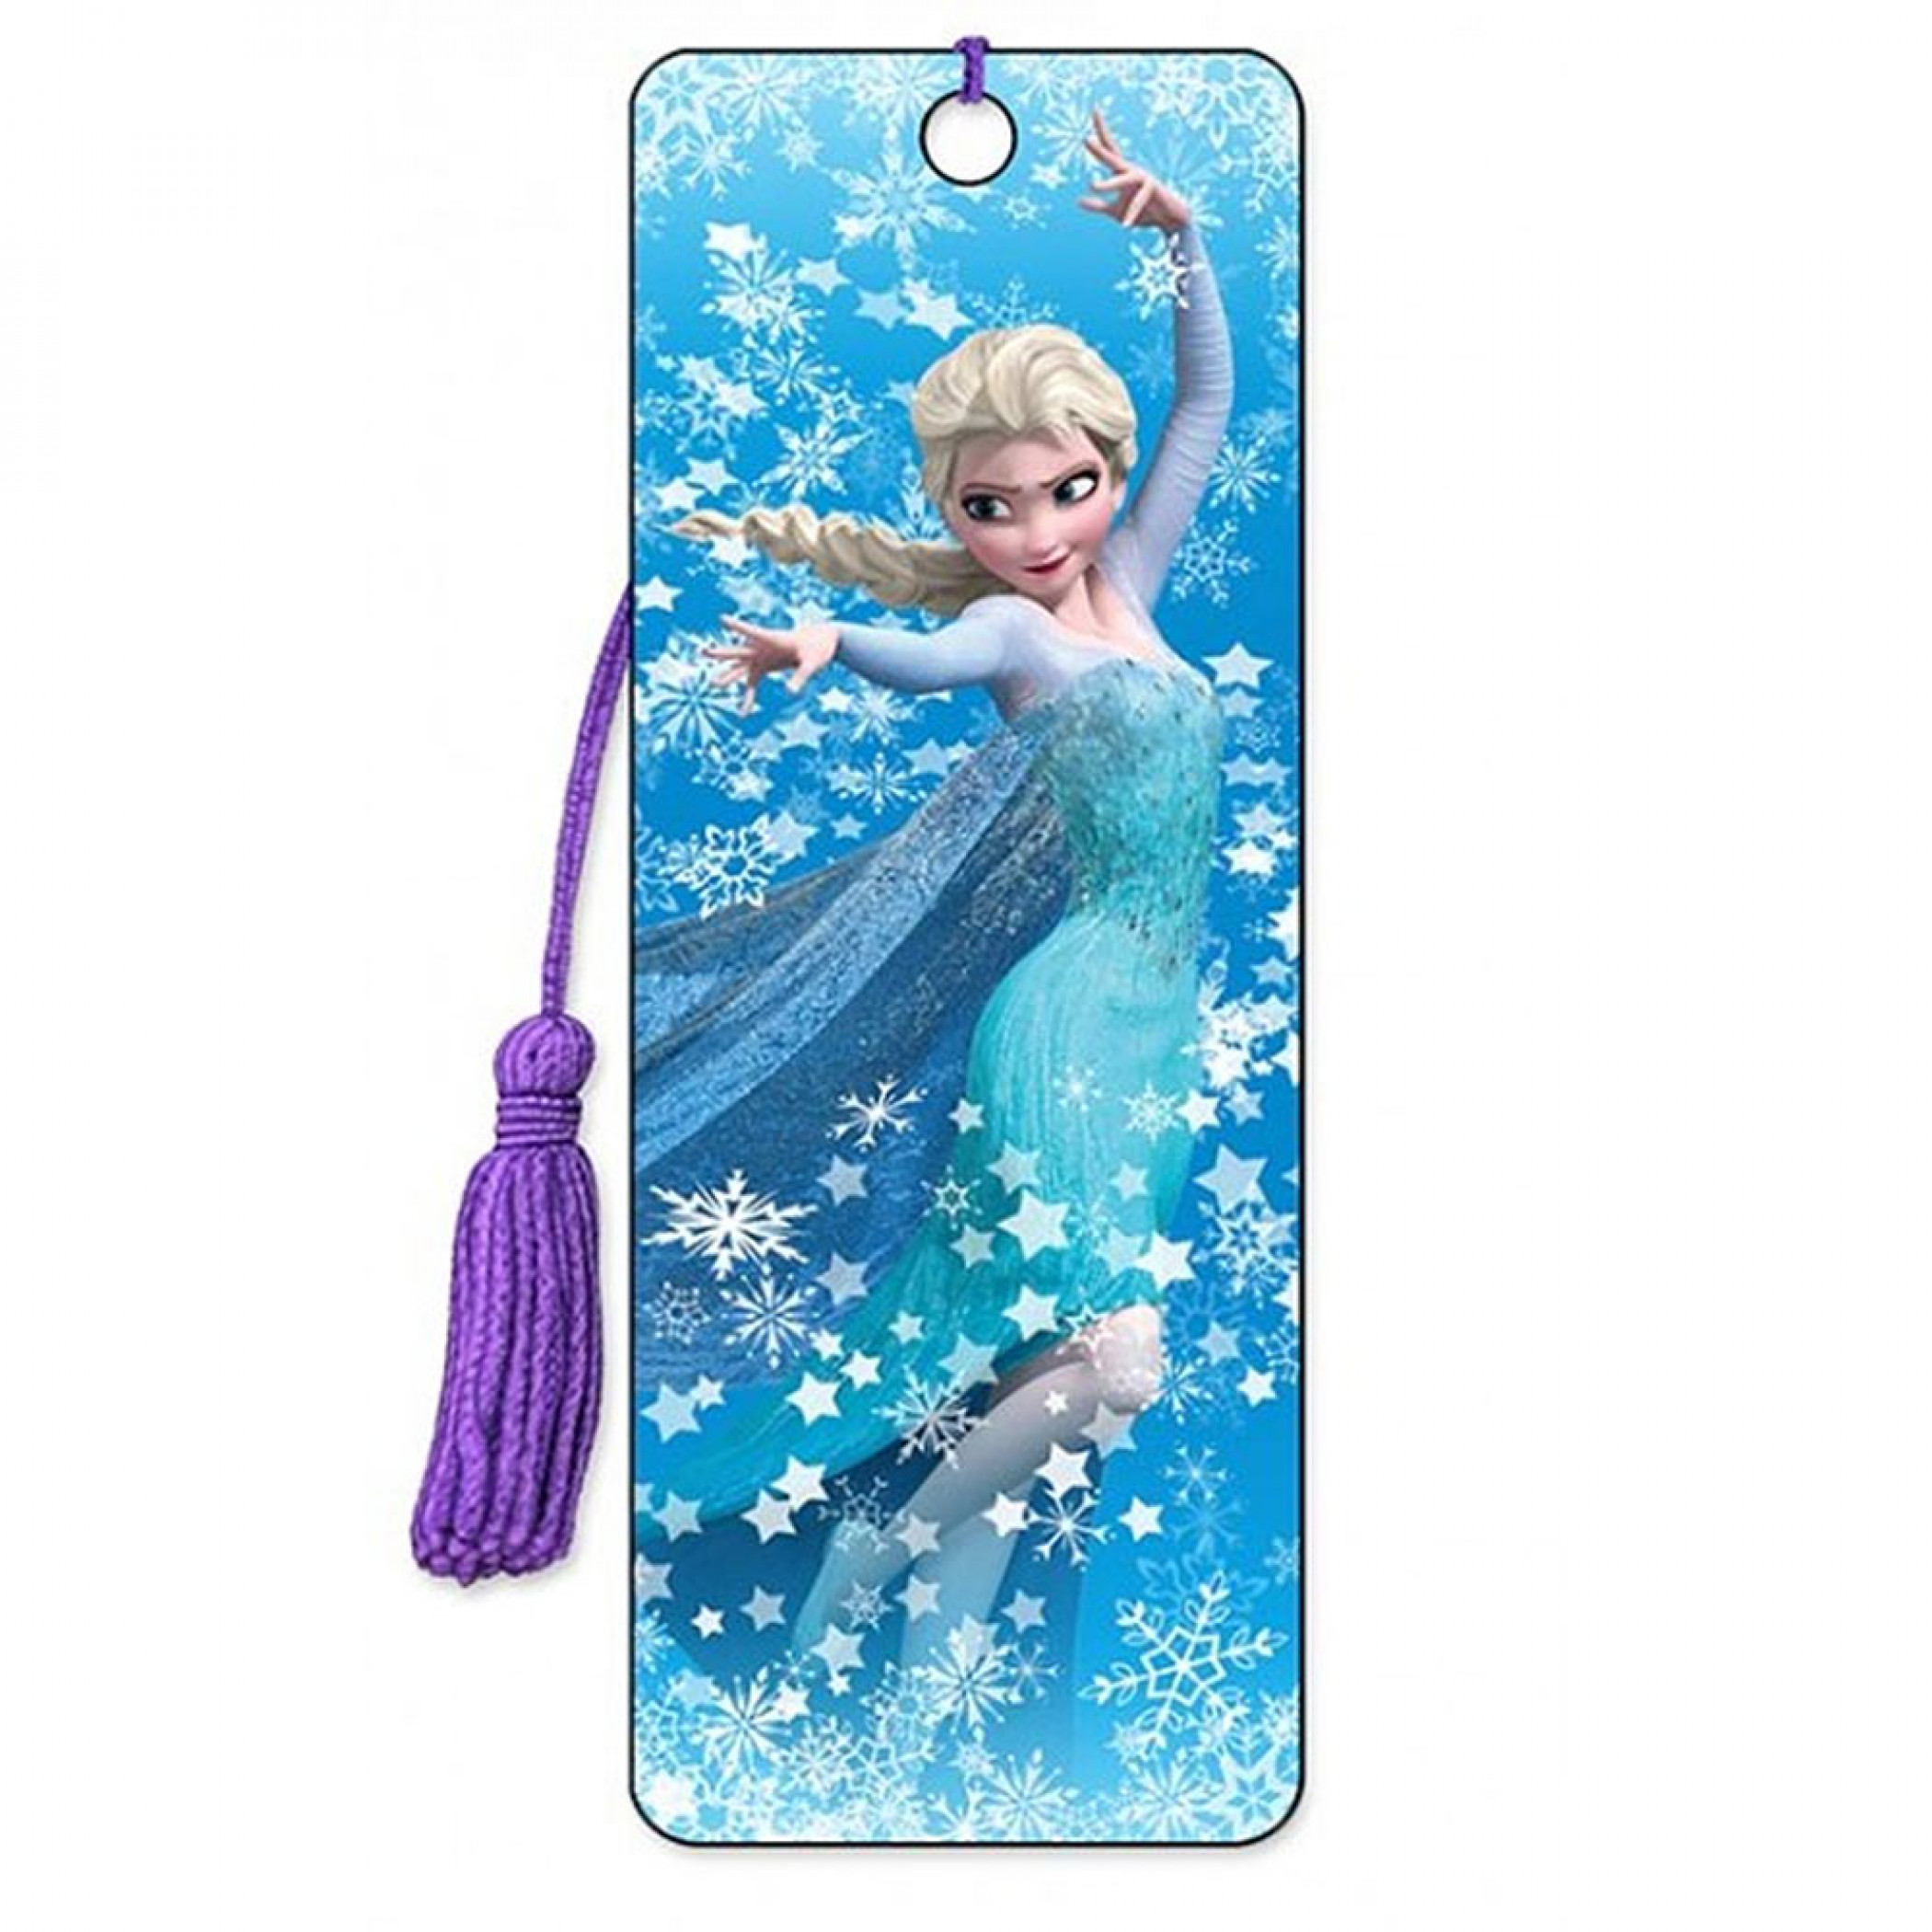 Frozen 2 Elsa 3D Moving Image Blue Bookmark